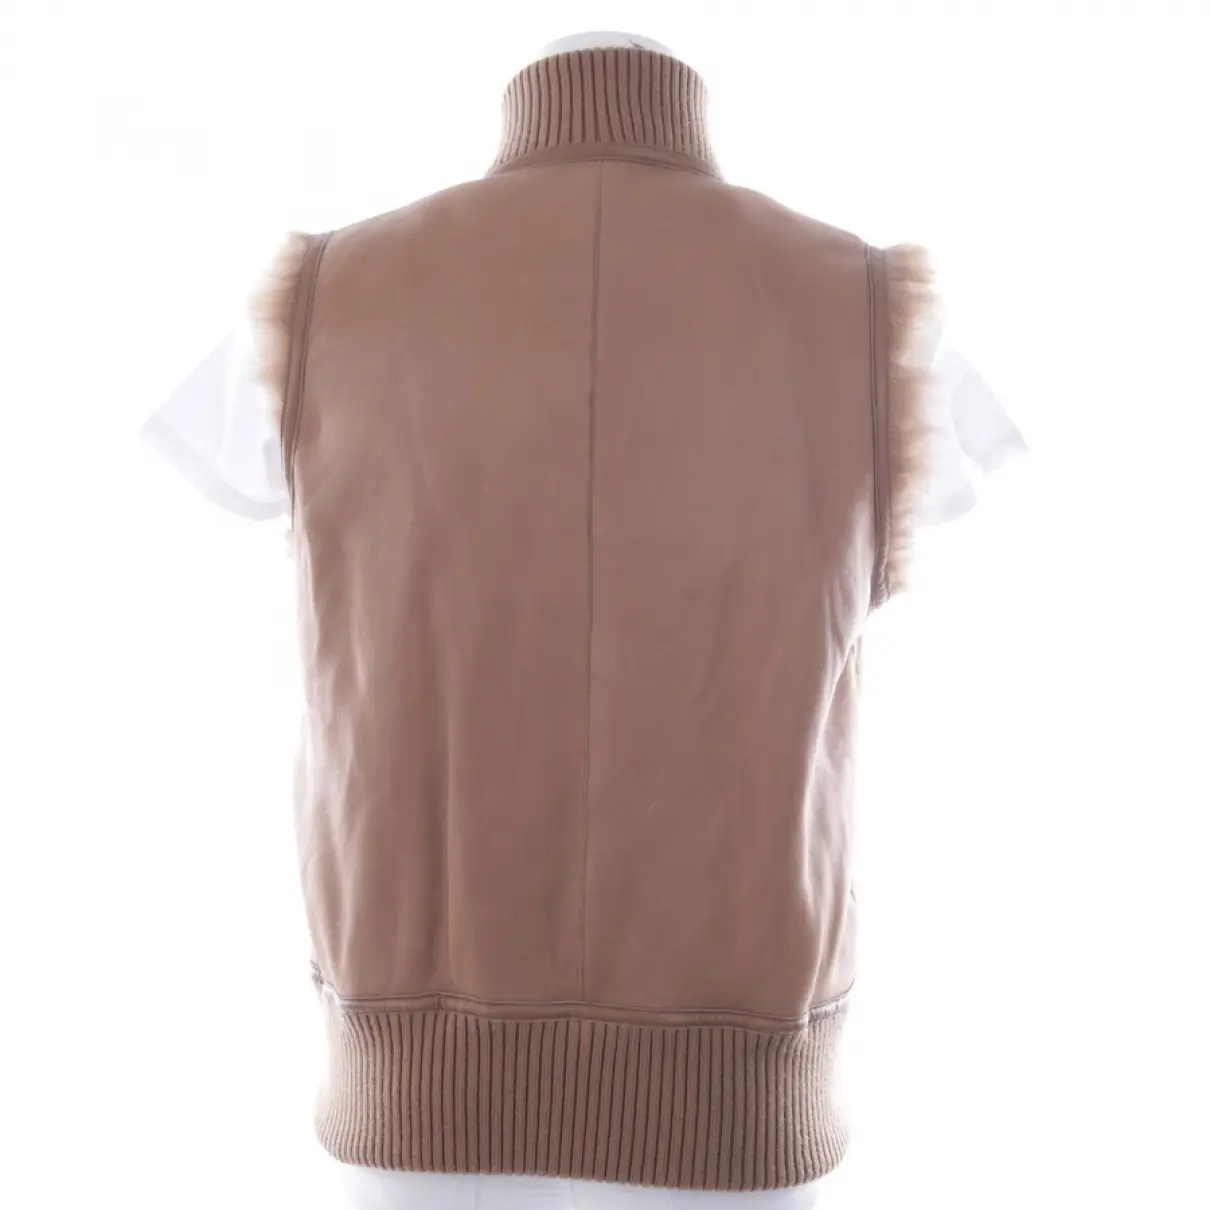 Buy Joseph Leather jacket online